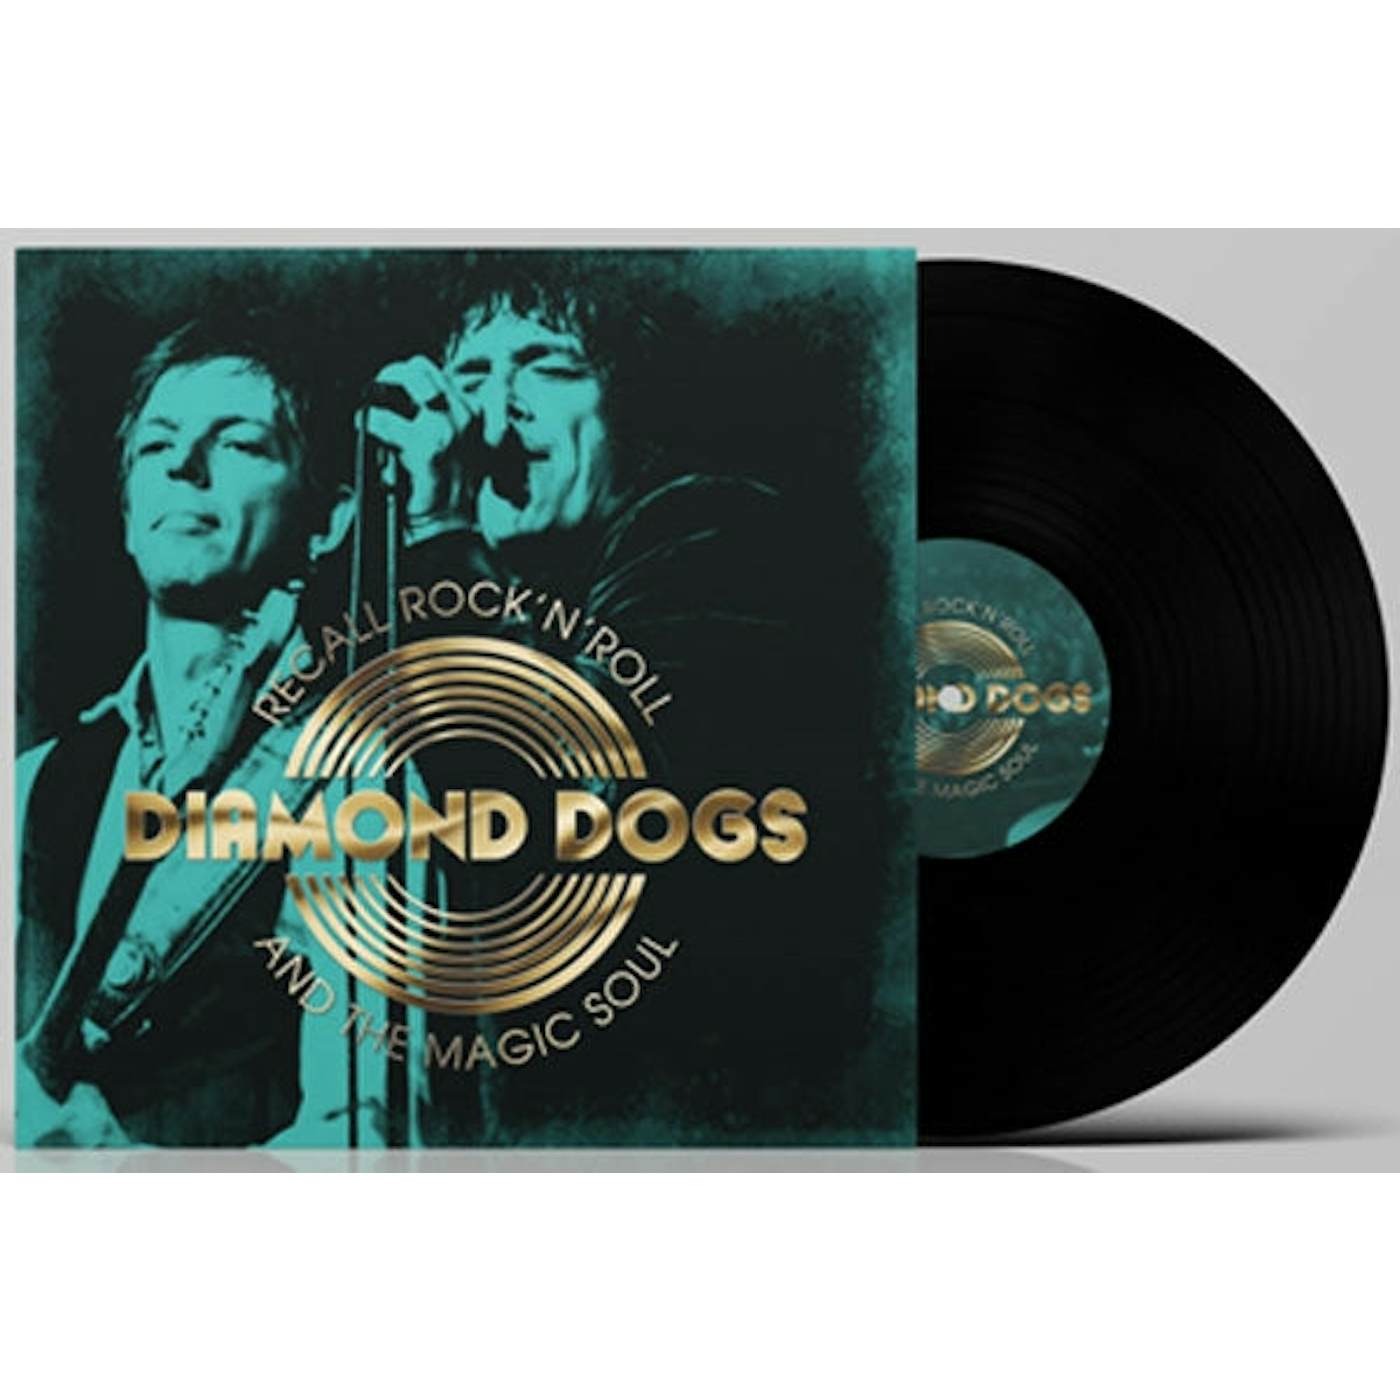 Diamond Dogs LP - Recall Rock 'N' Roll And The Magic Soul (Vinyl)